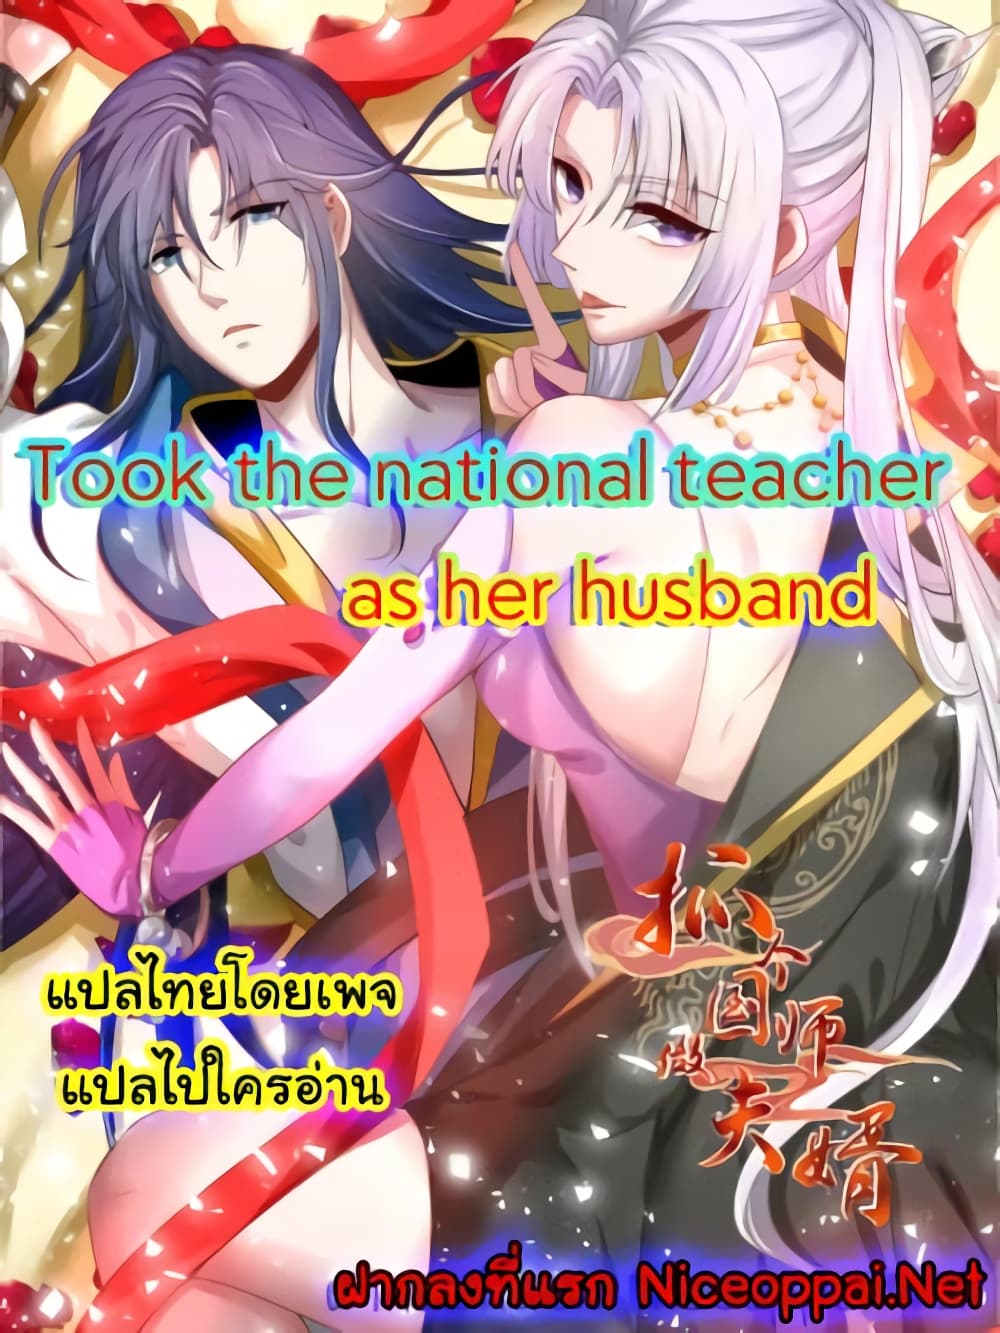 Took the National Teacher as Her Husband10 (1)